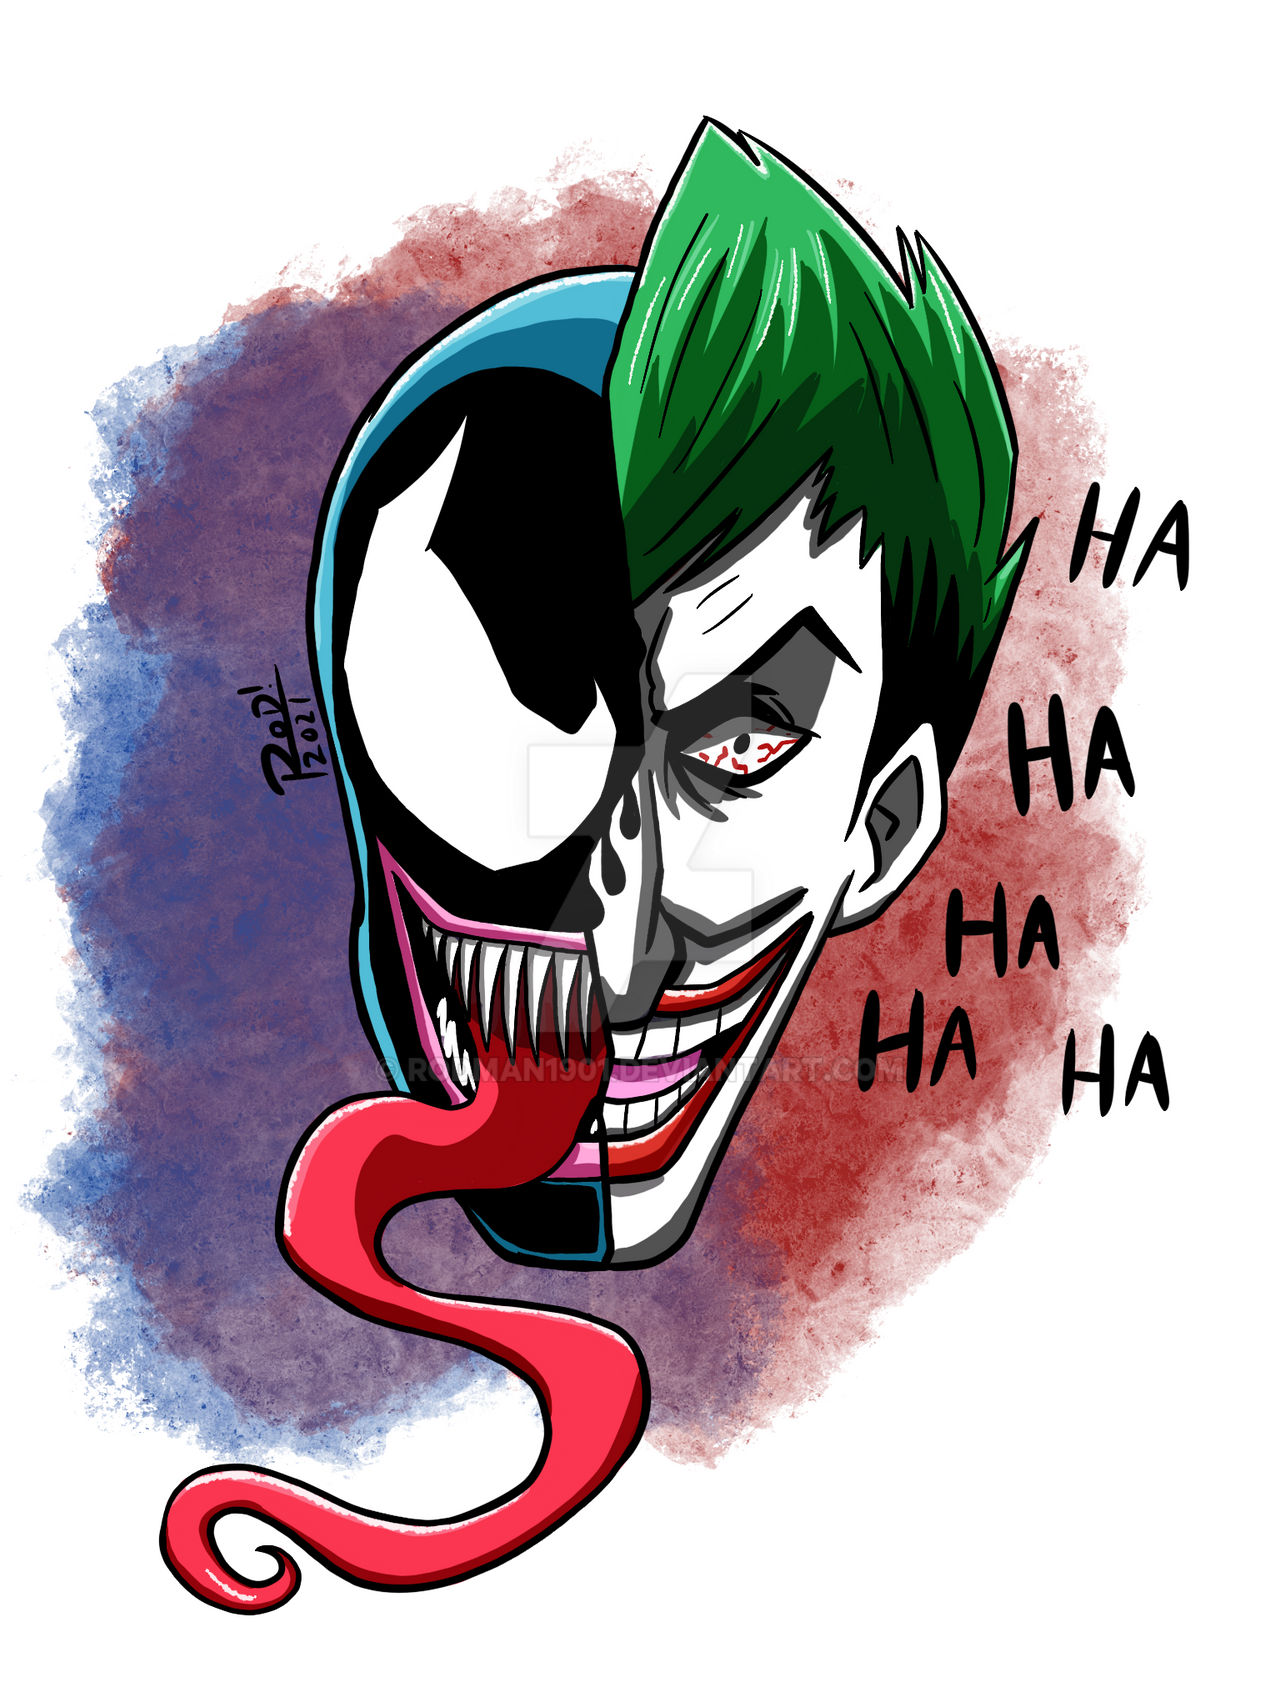 Venom/Joker Tattoo Design by Rodman1901 on DeviantArt